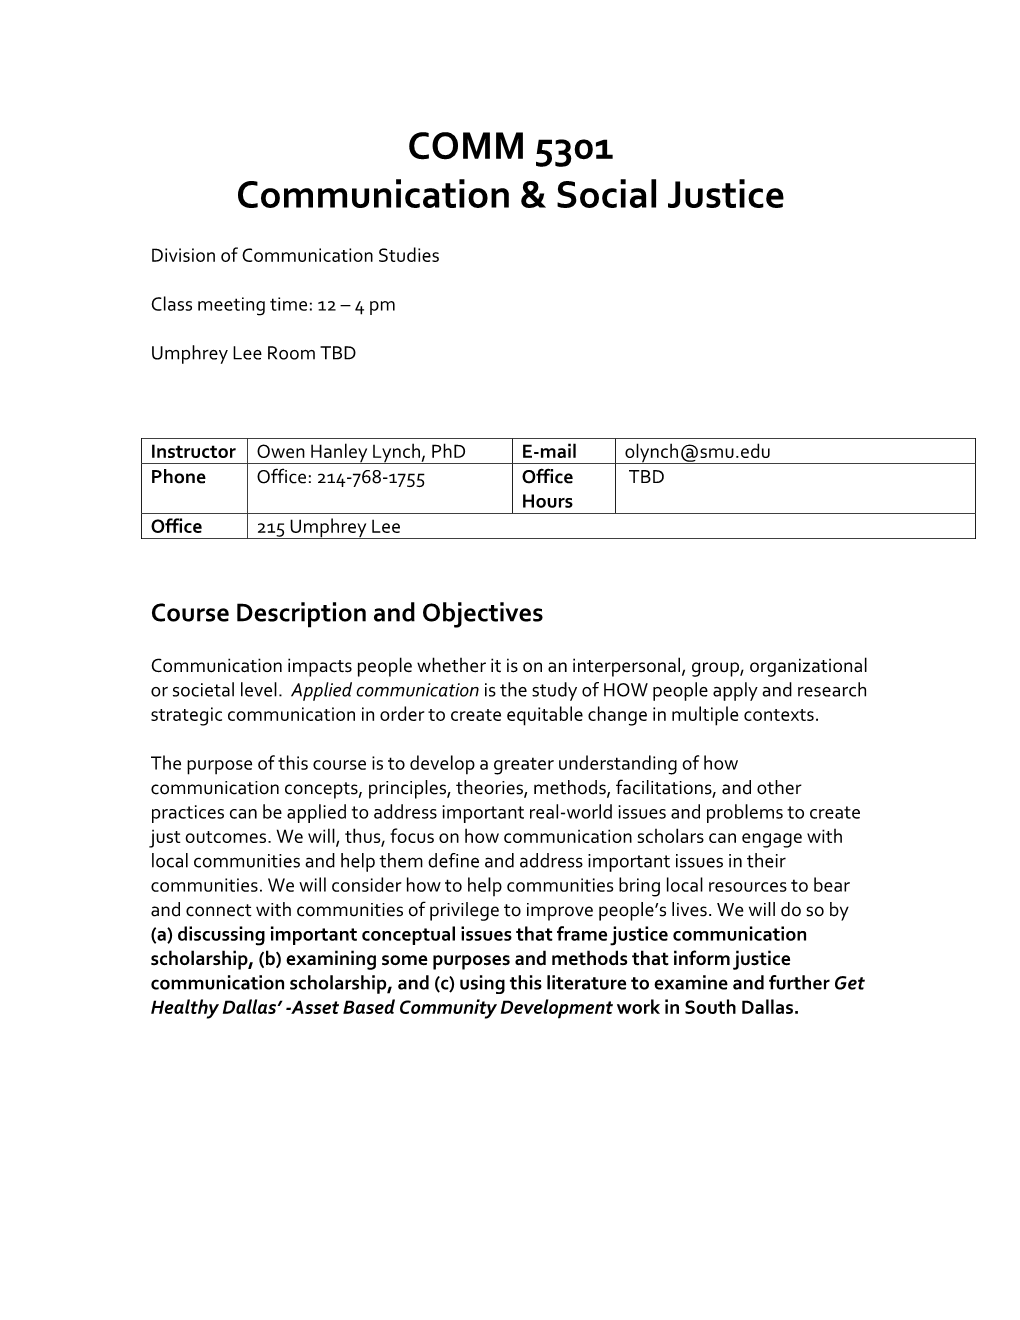 COMM 5301 Communication & Social Justice